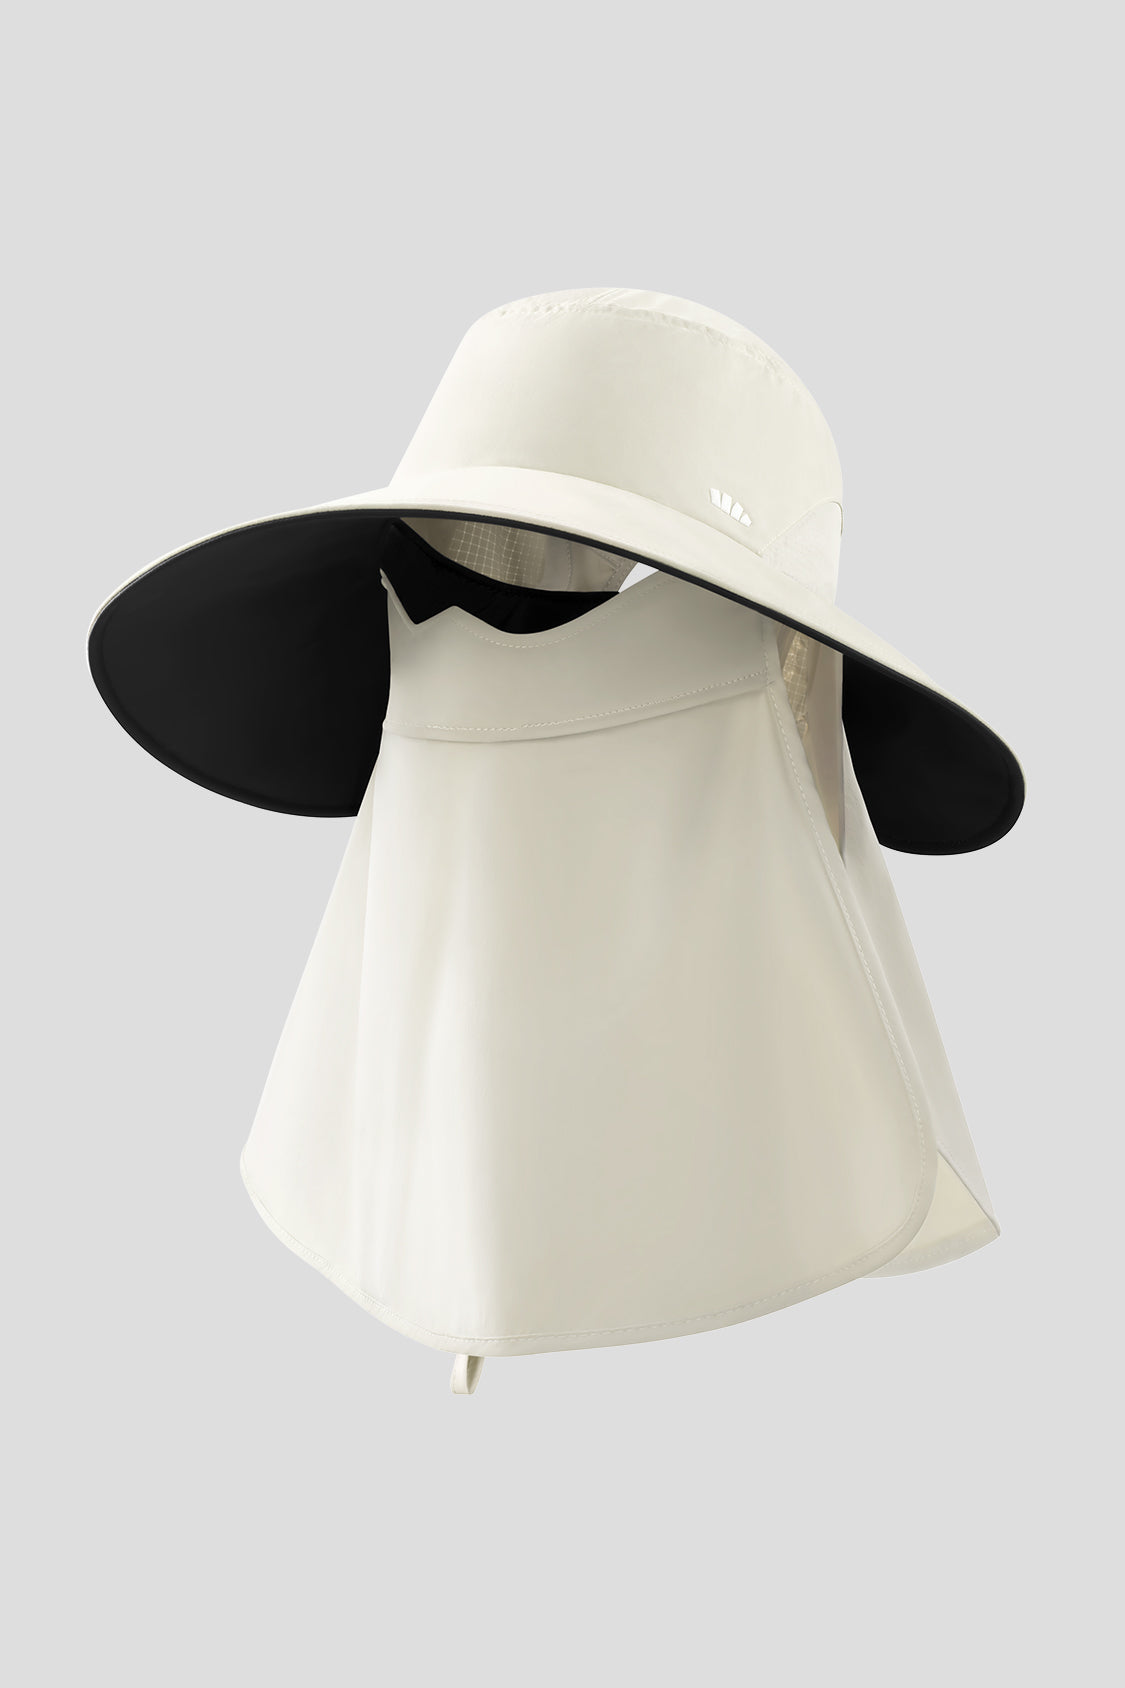 Wonder - Women's Full Coverage Sun Hats UPF50+